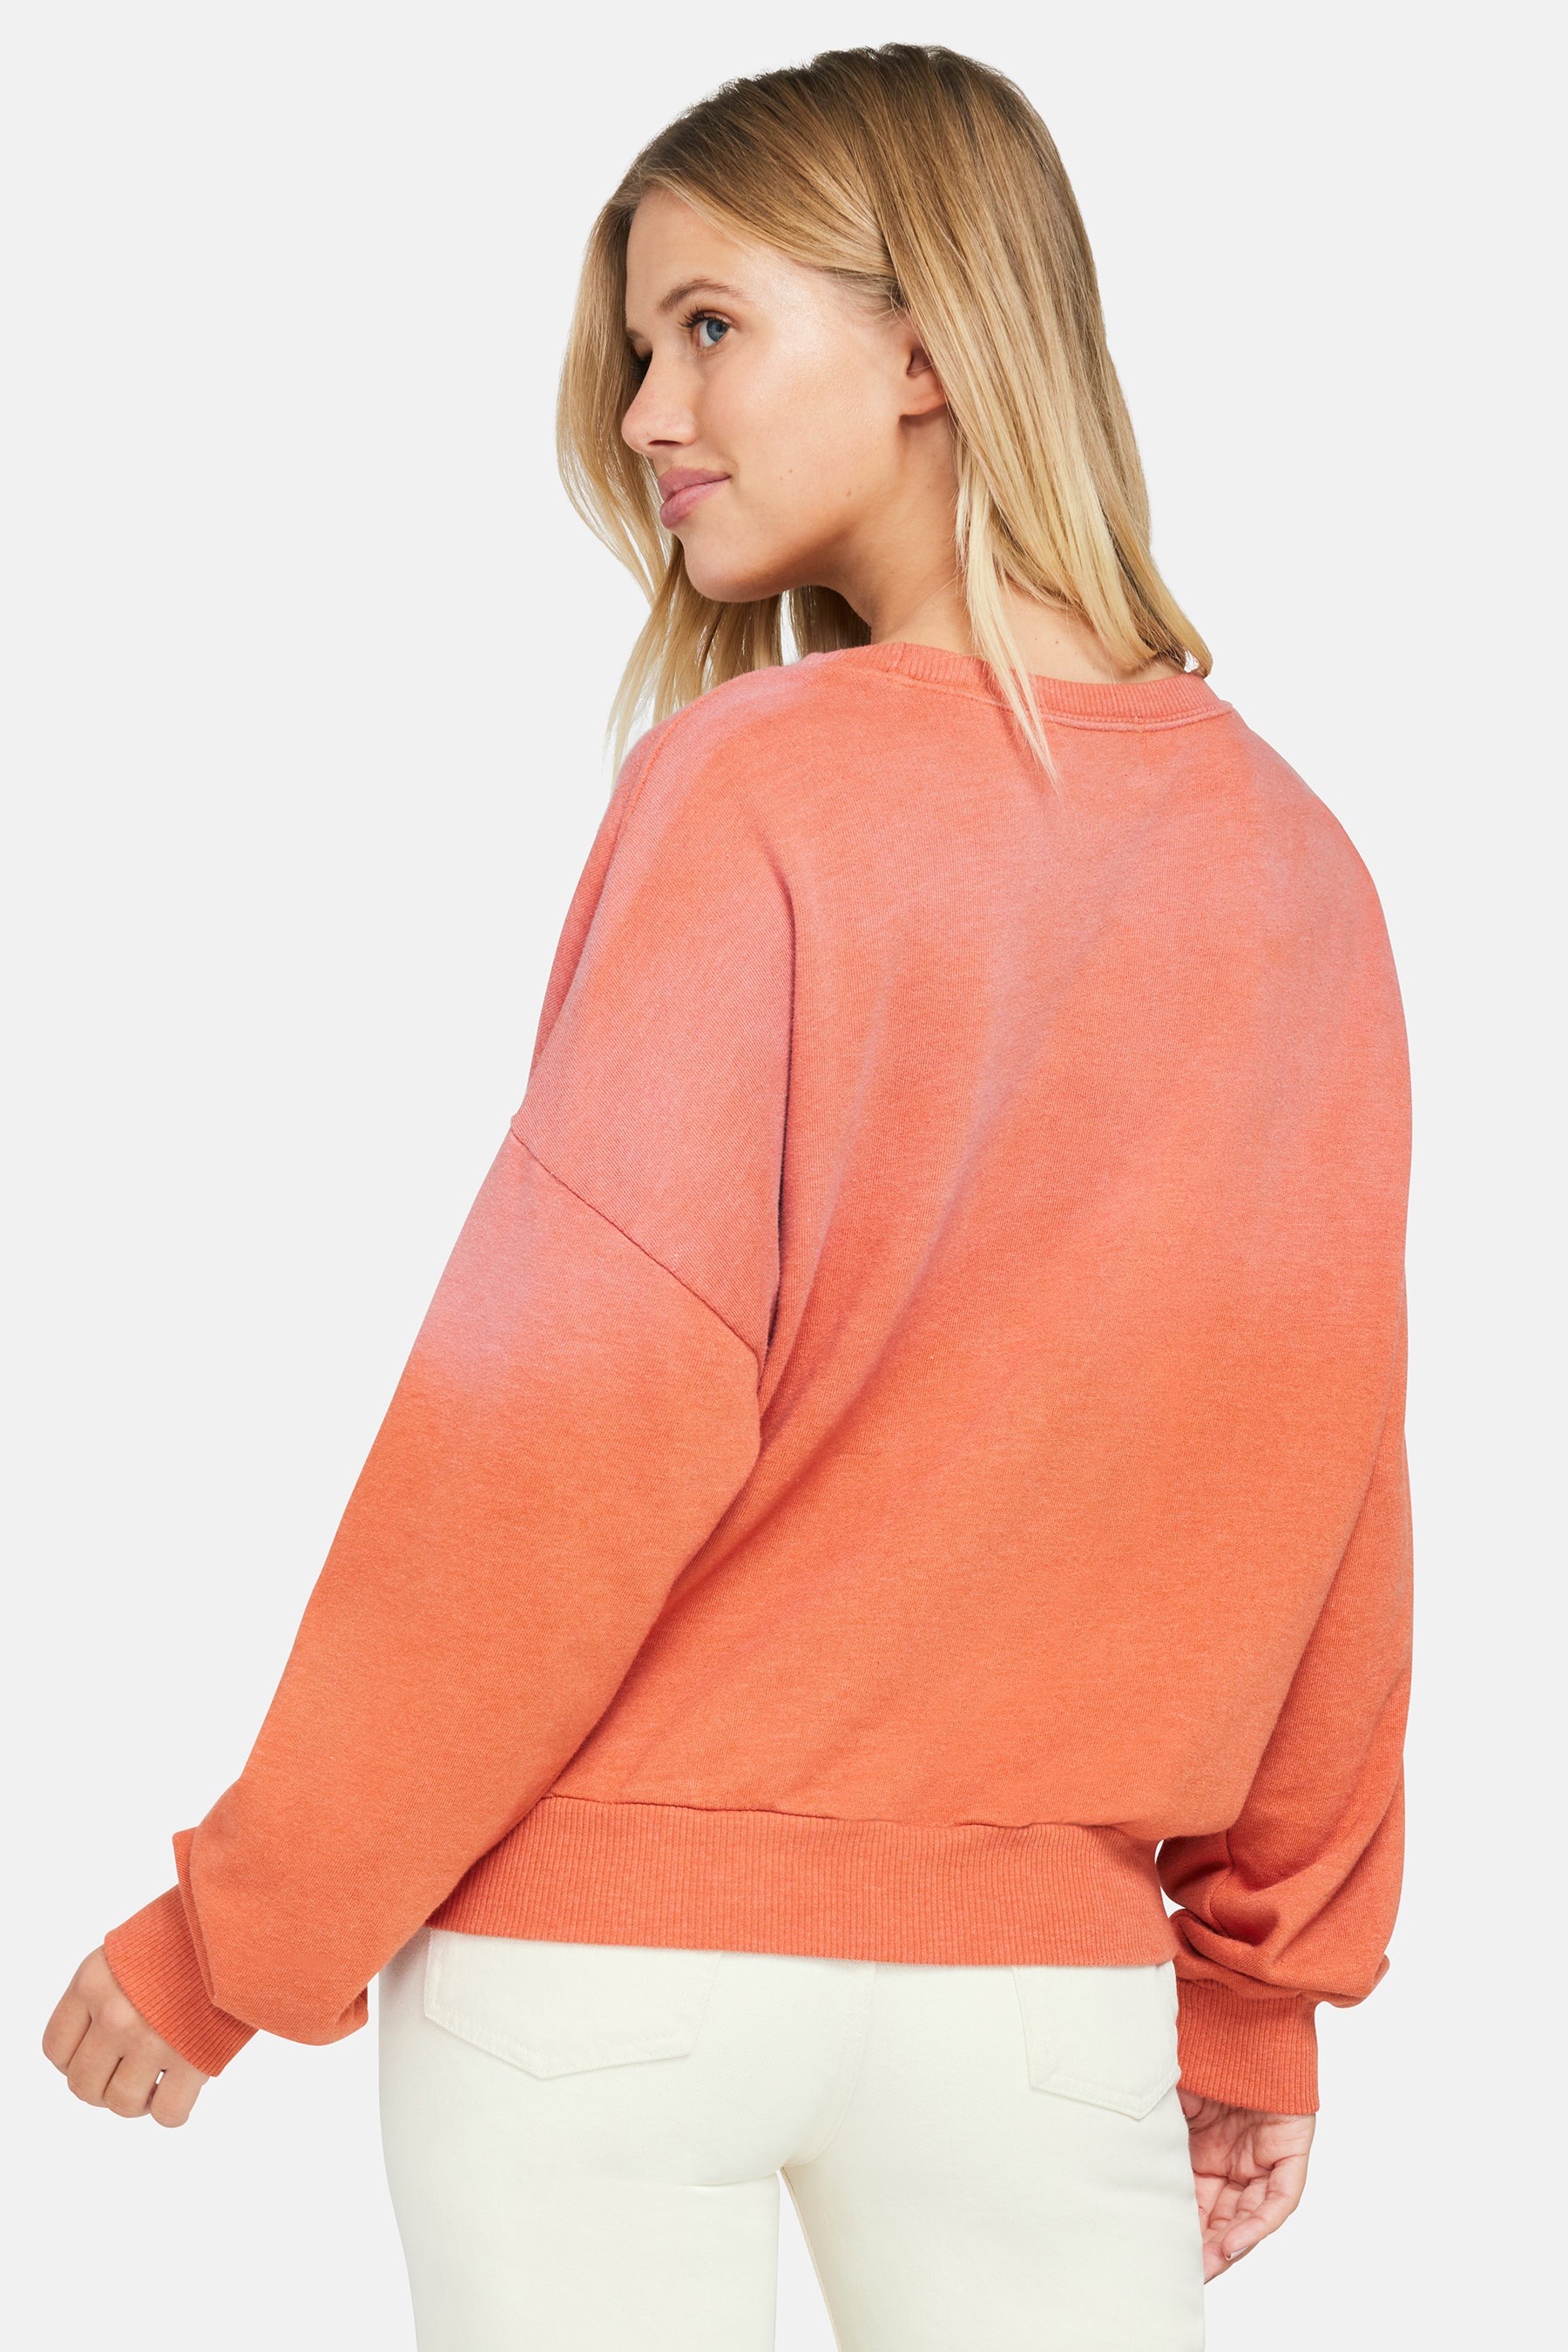 Yours Truly Fifi Sweatshirt | Apricot Brandy